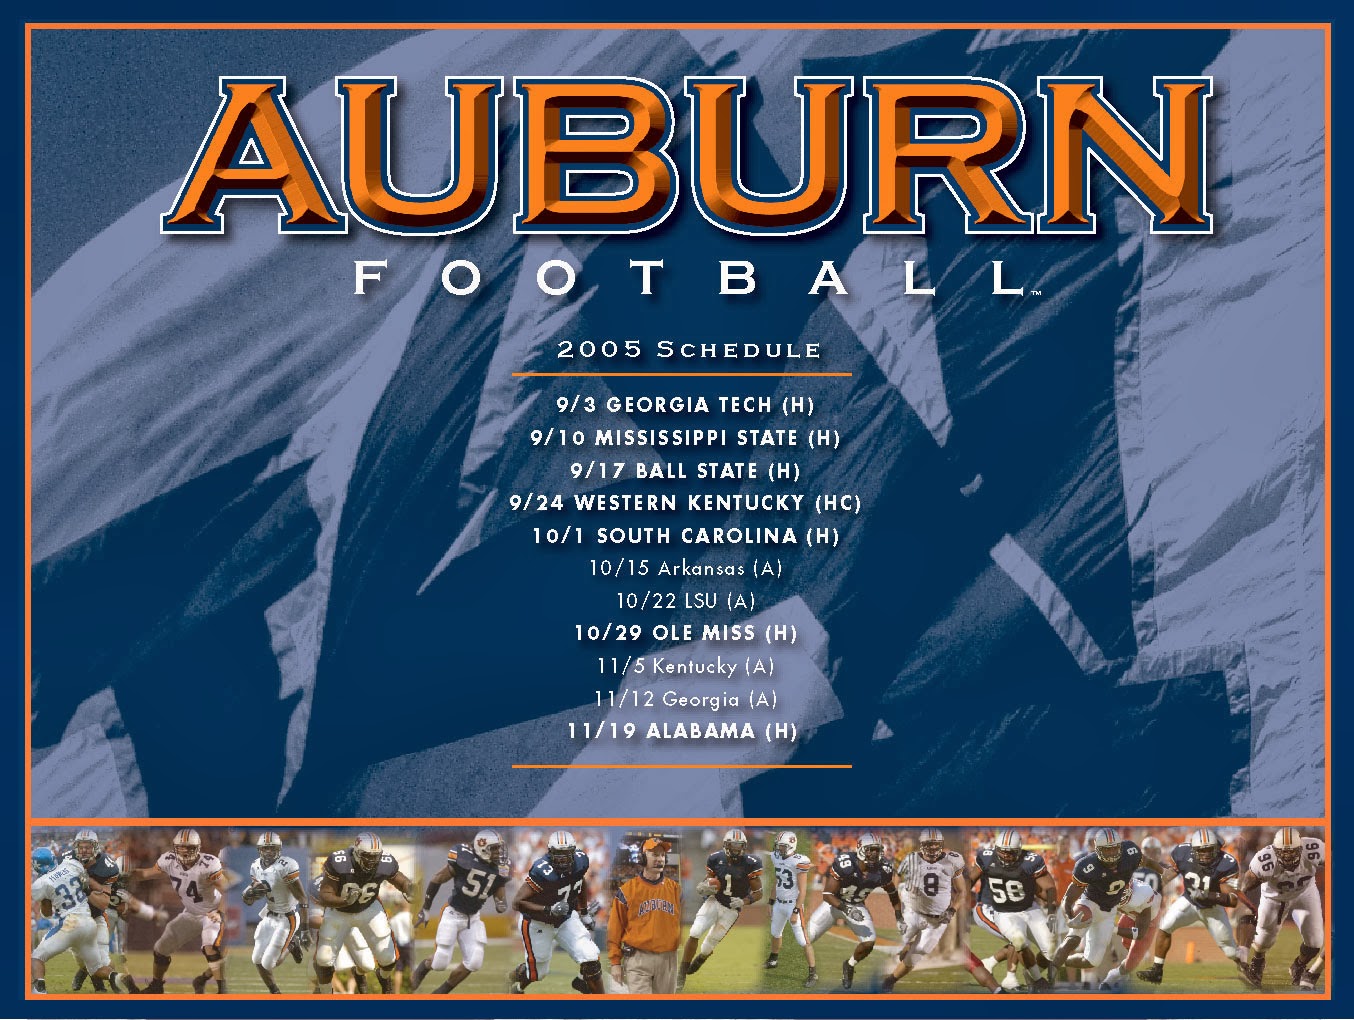 Auburn football wallpaper in high resolution for Get Auburn 1354x1020